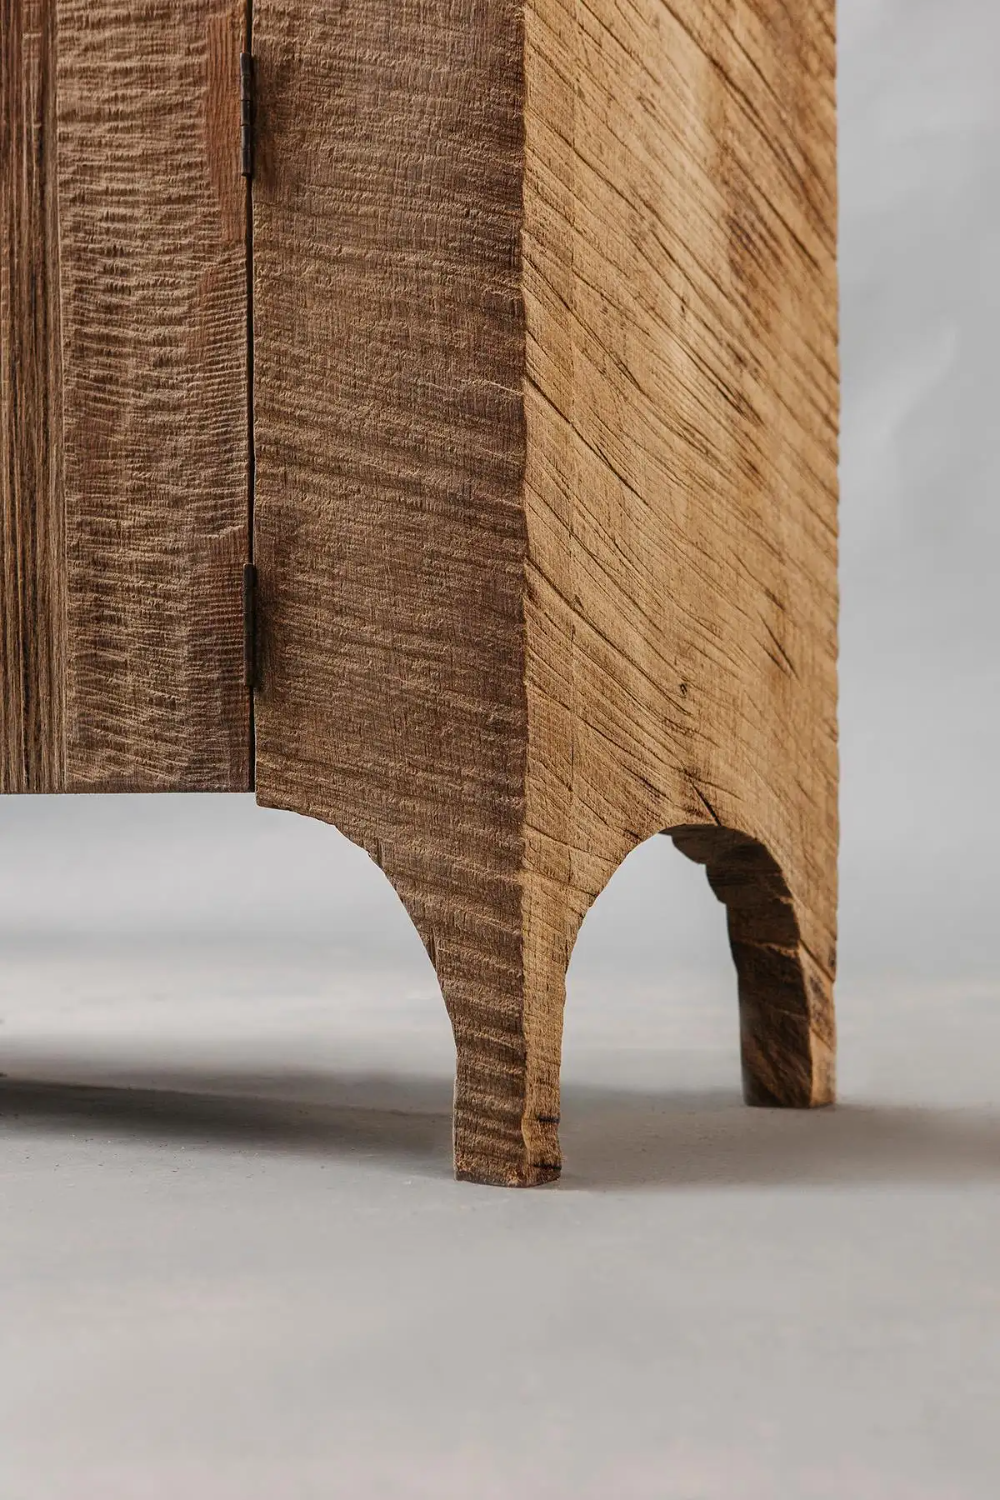 Timeless Elegance: The Beauty of Oak
Furniture